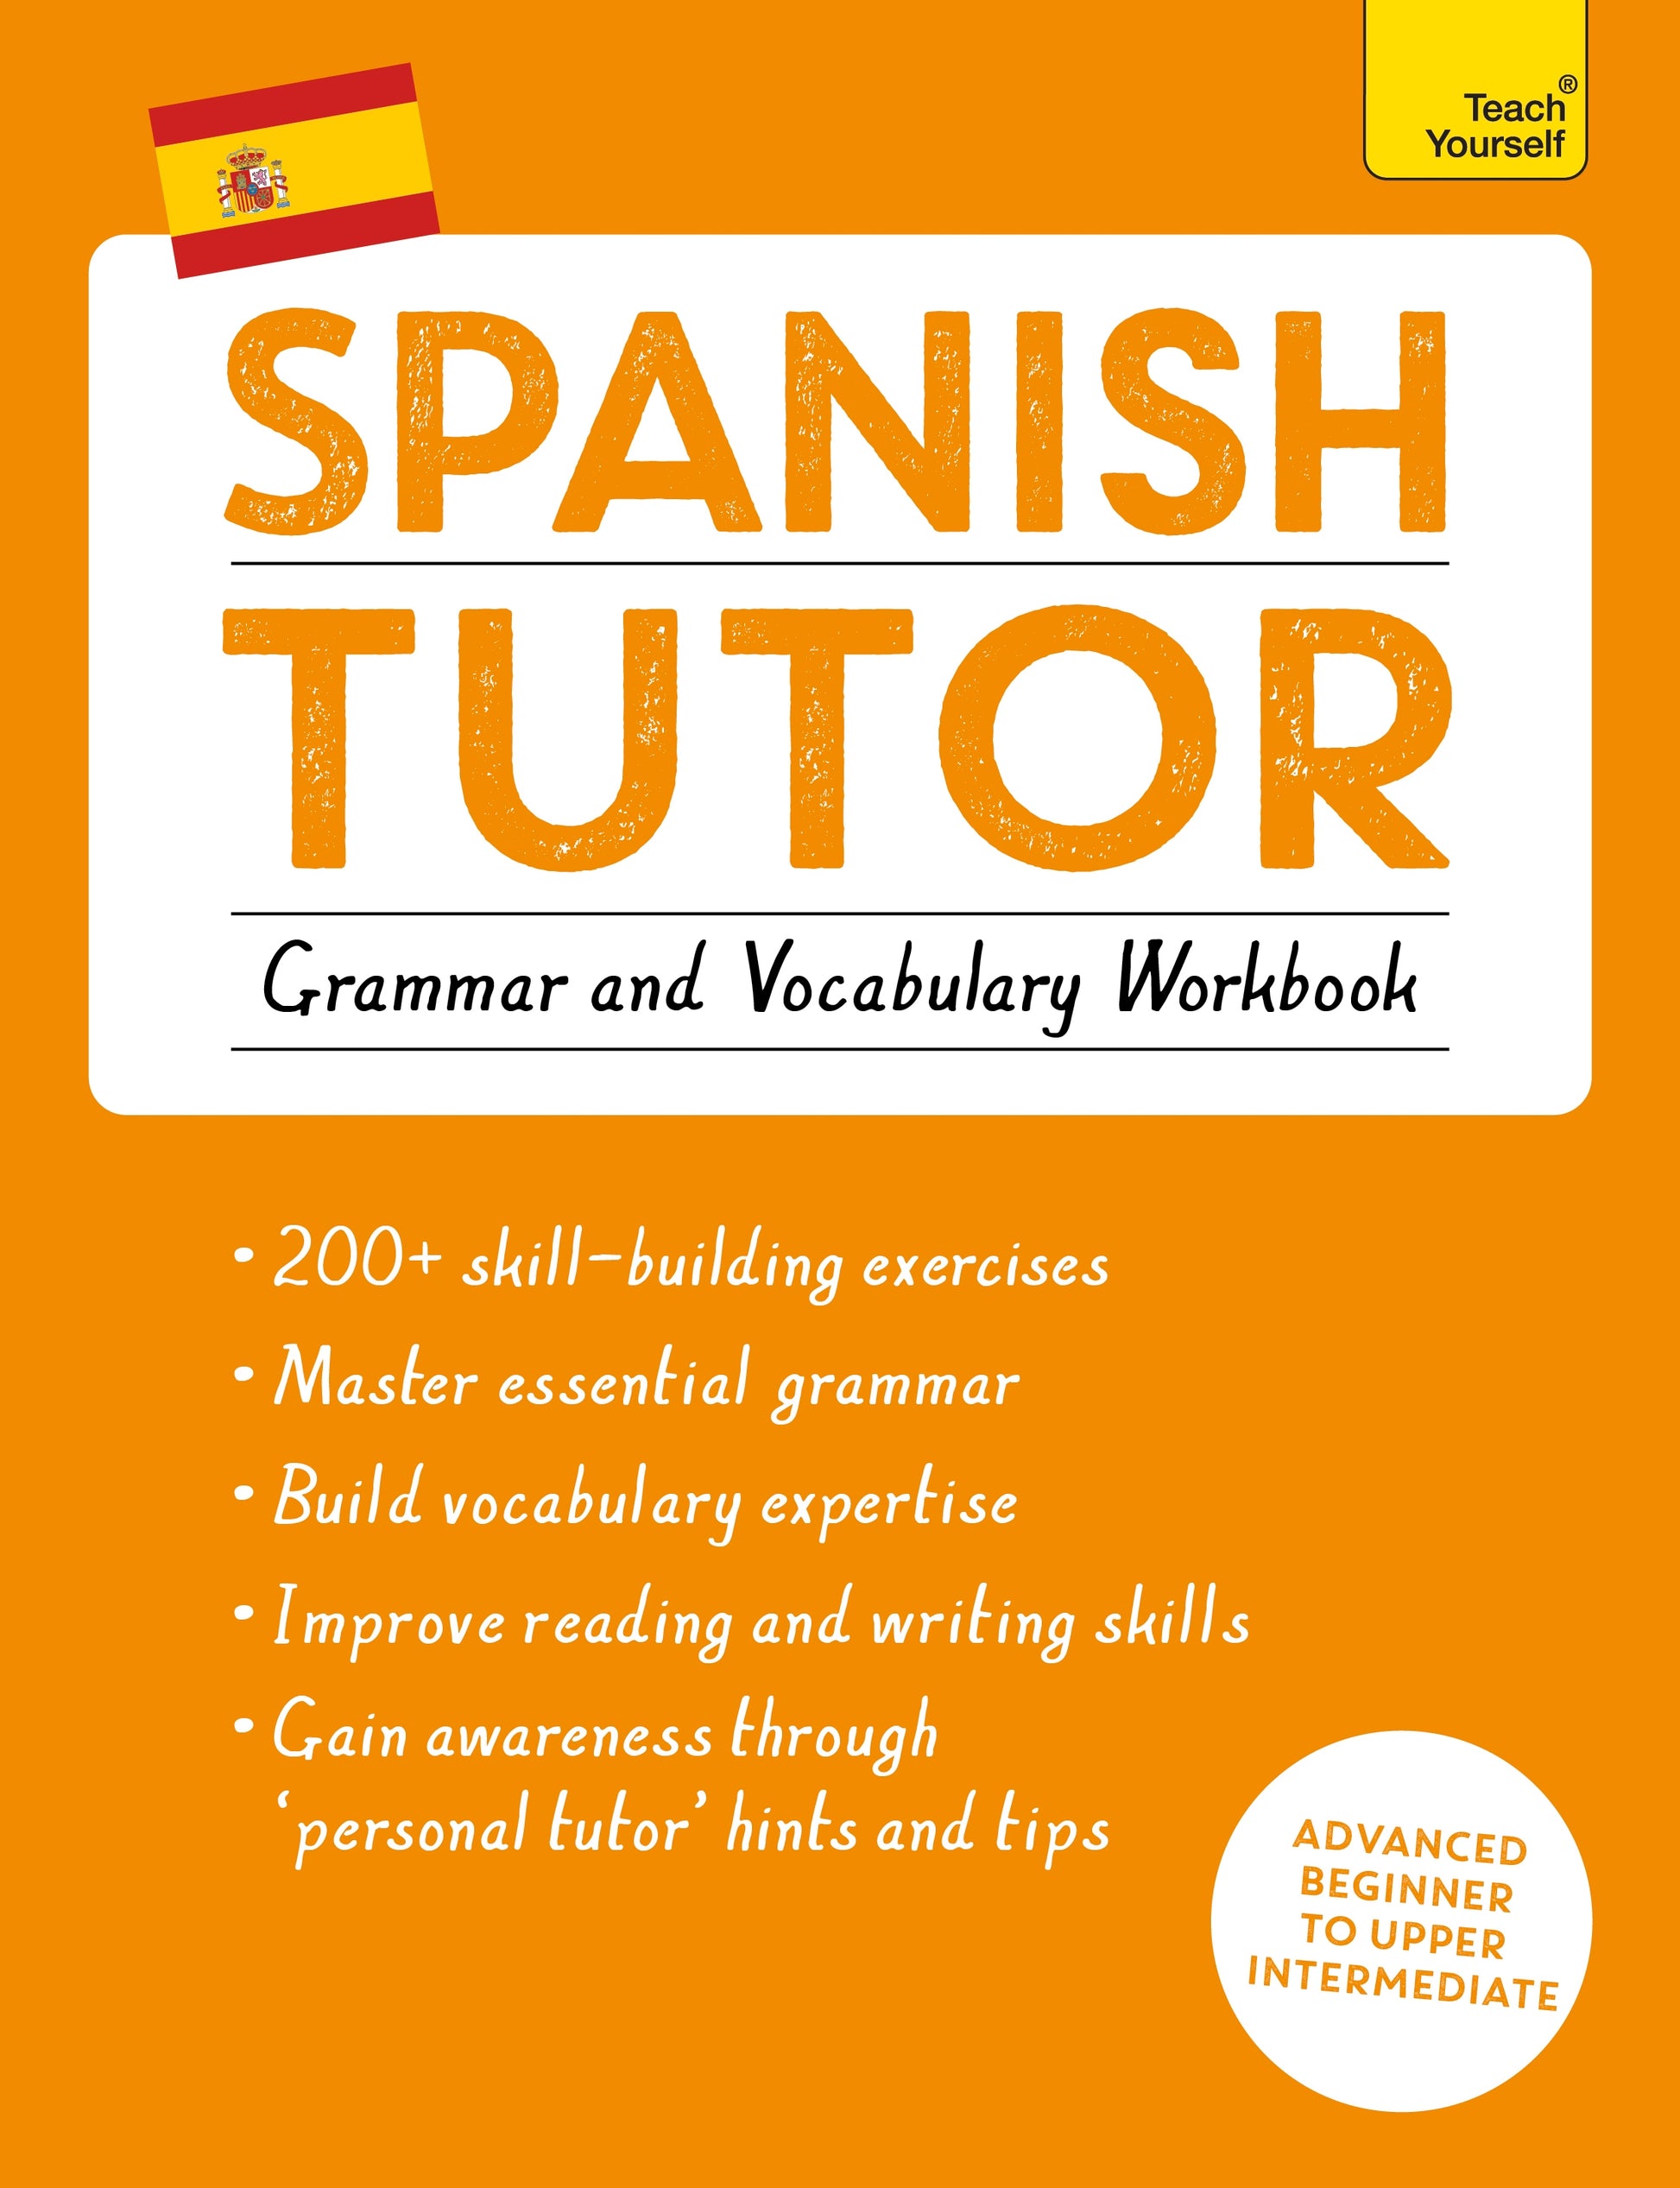 Spanish Tutor: Grammar and Vocabulary Workbook (Learn Spanish with Teach Yourself) by Juan Kattan-Ibarra, Angela Howkins